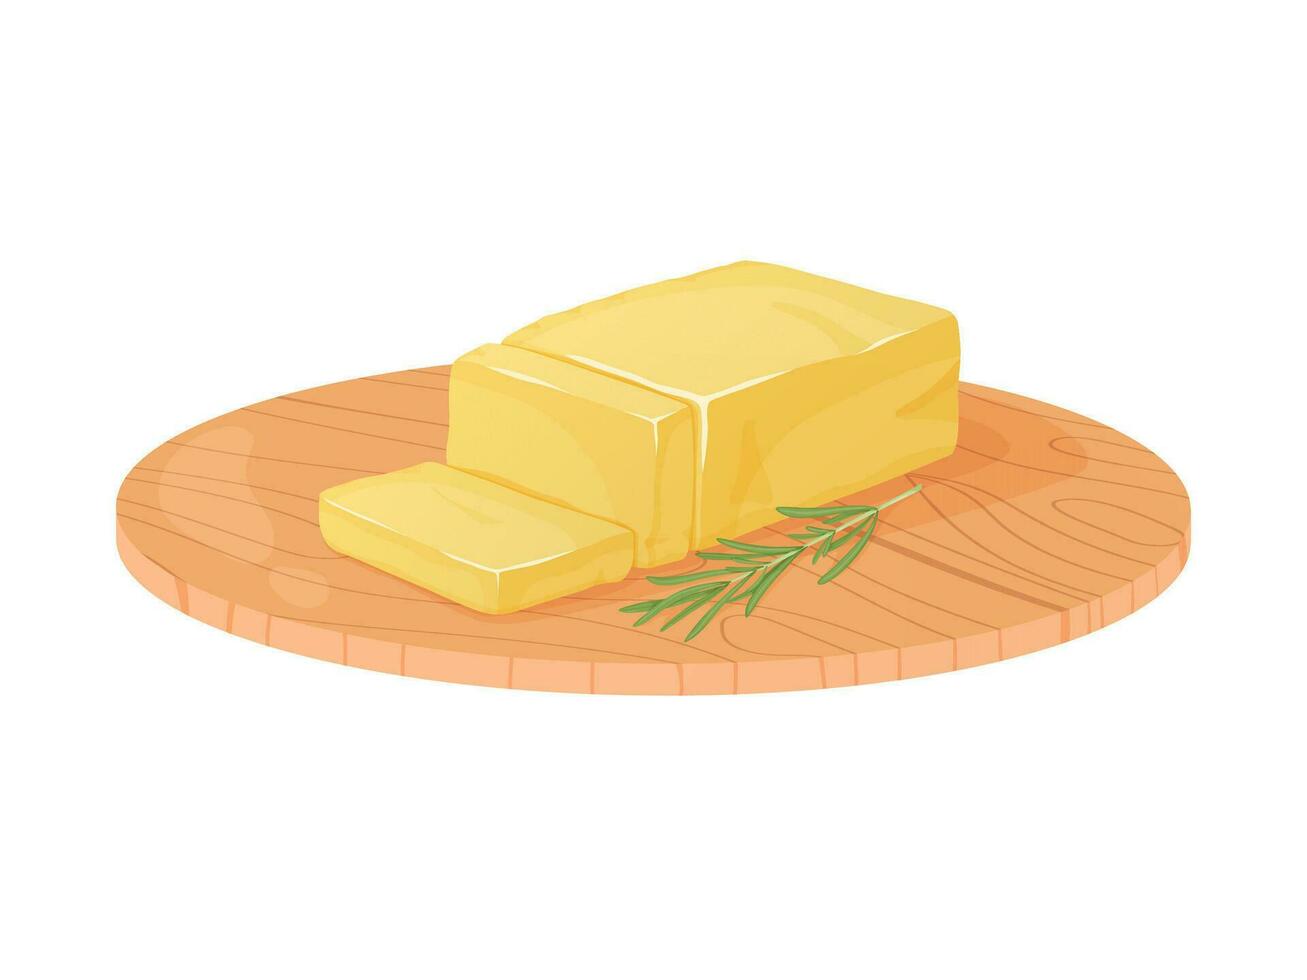 tijolo do manteiga. Margarina ou leite manteiga blocos. laticínios café da manhã Comida. vetor